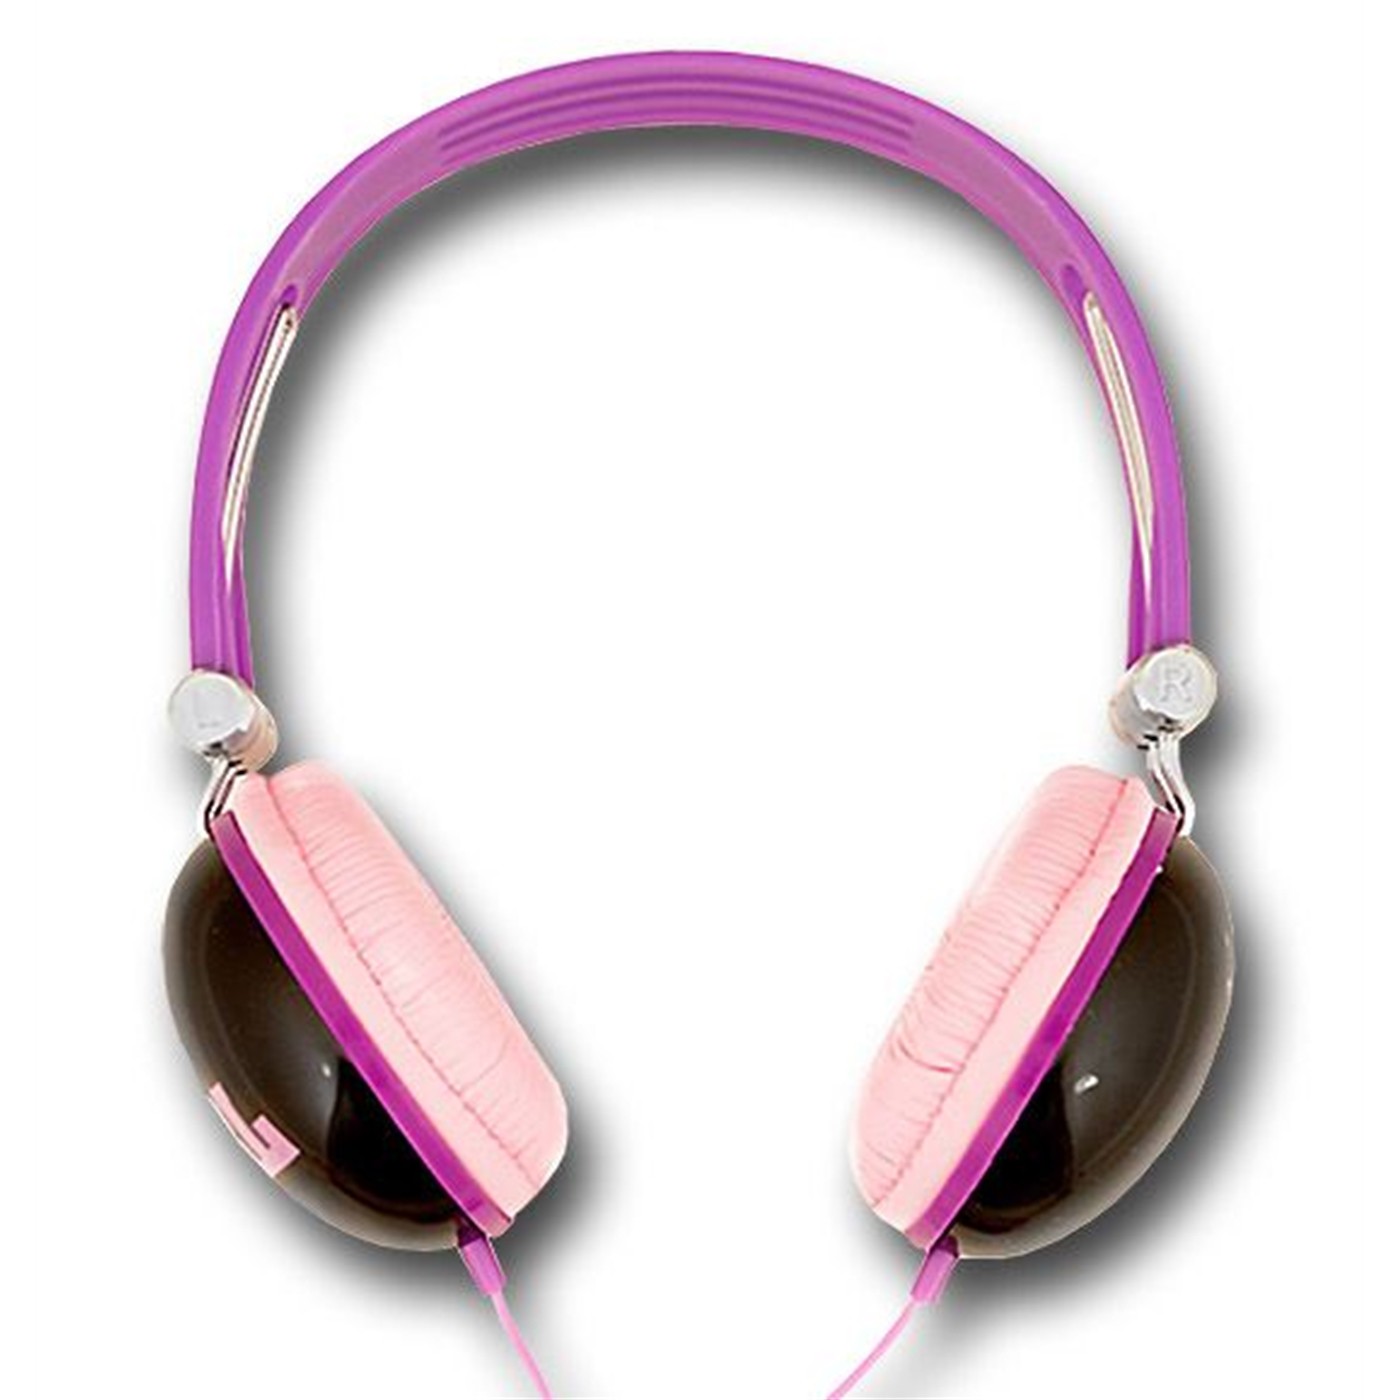 Kick-Ass Hit Girl Headphones